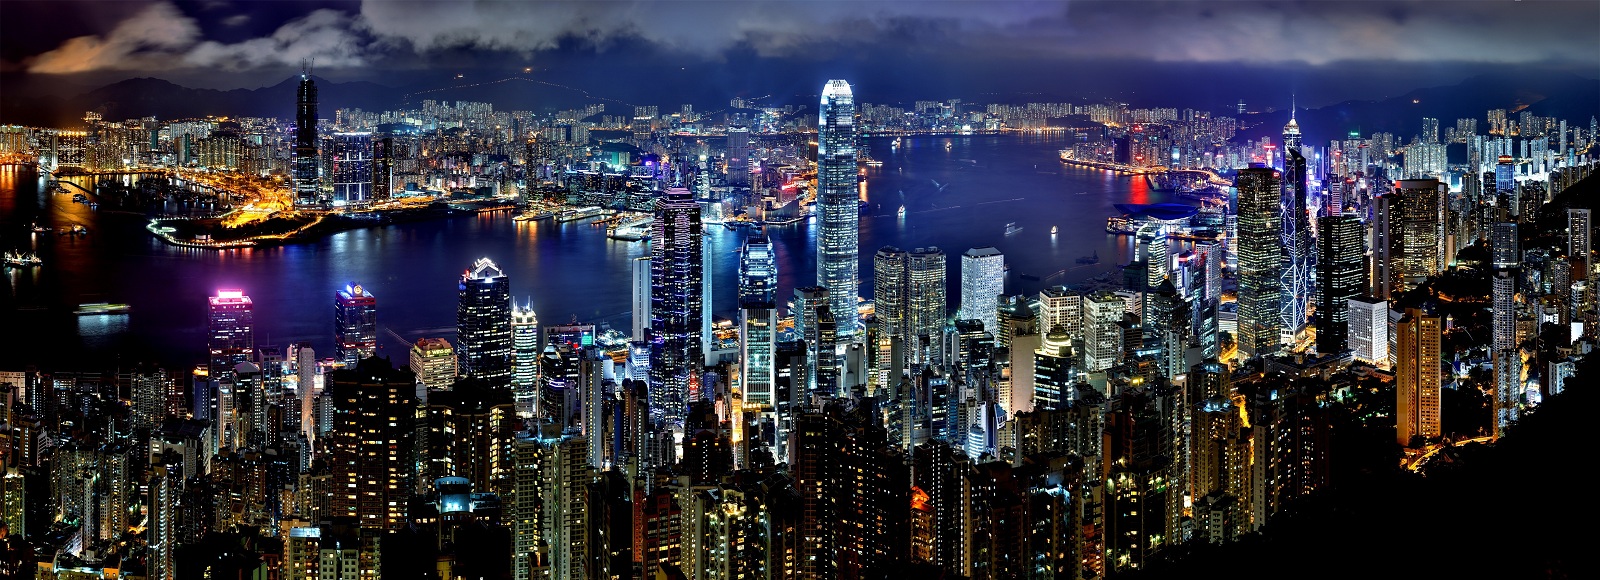 Ofertas de Traslados en Hong Kong. Traslados económicos en Hong Kong 